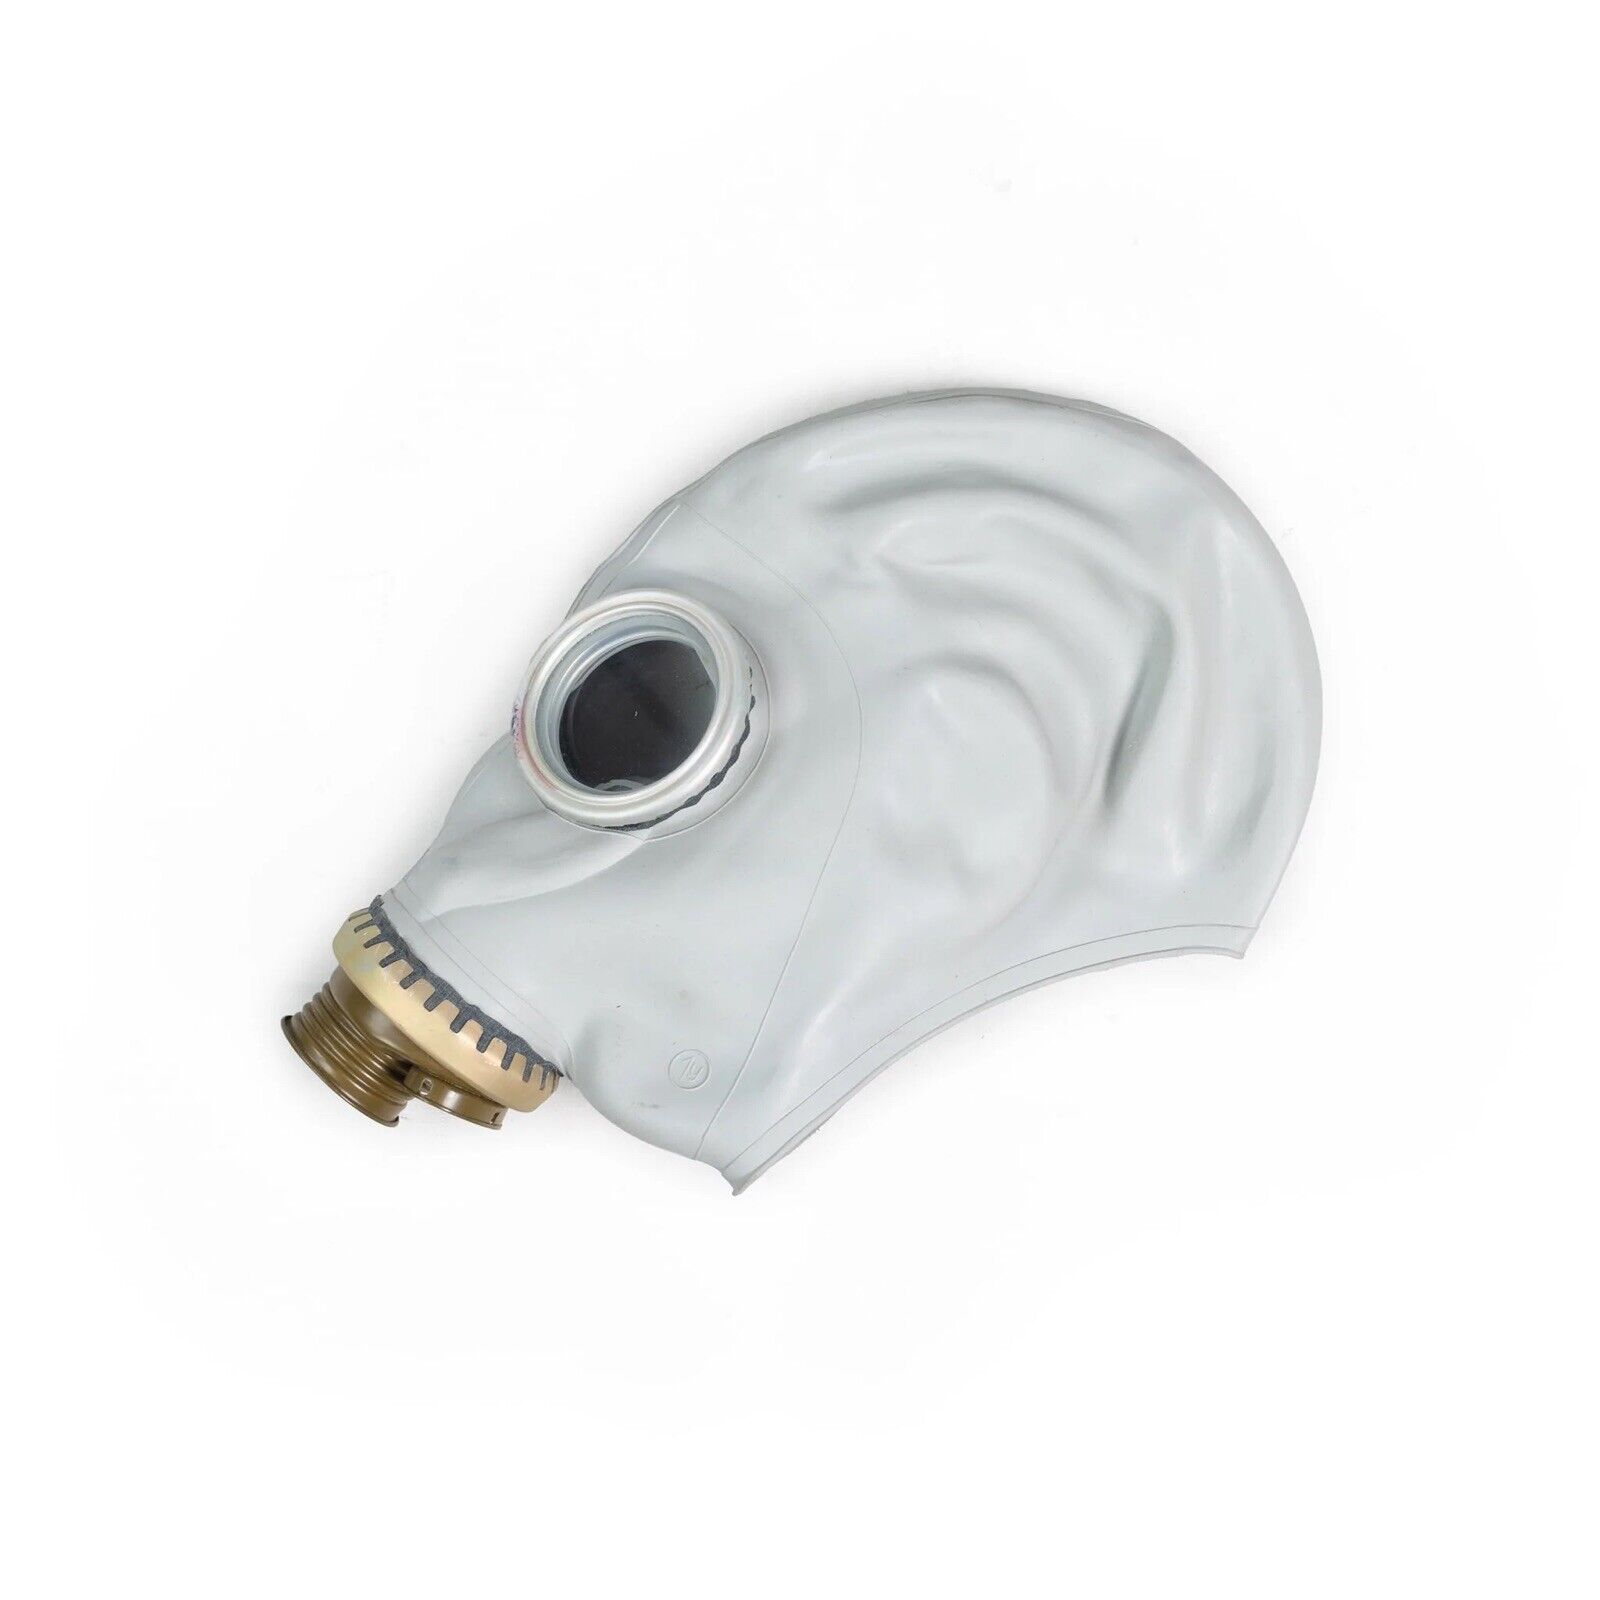 gp-5 gas mask  No Filter - White Size Large